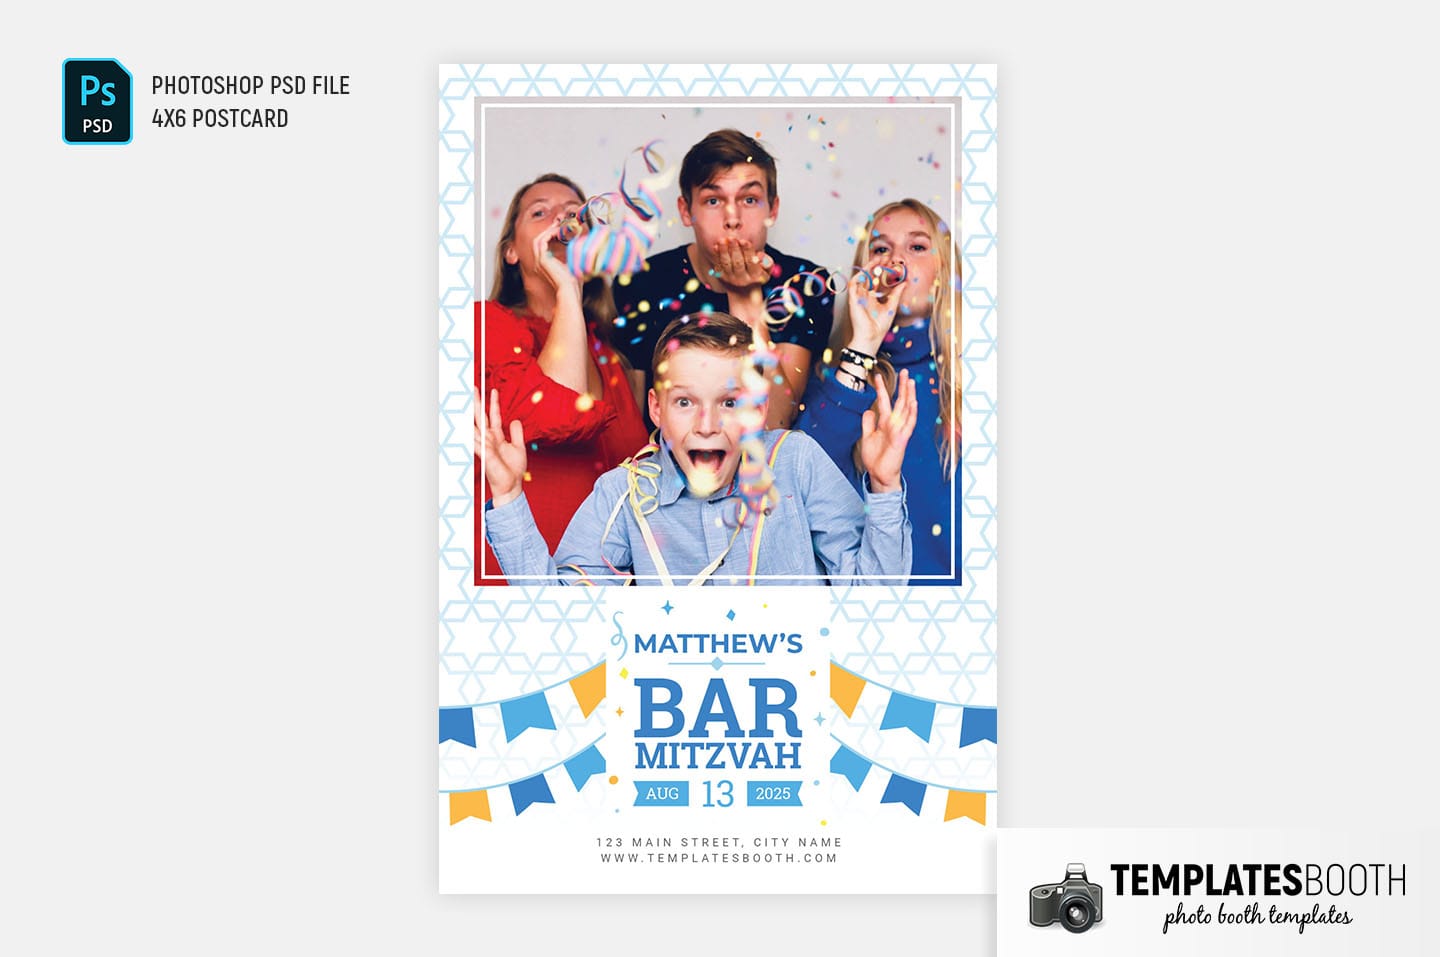 Bar Mitzvah Photo Booth Template (4x6 postcard)